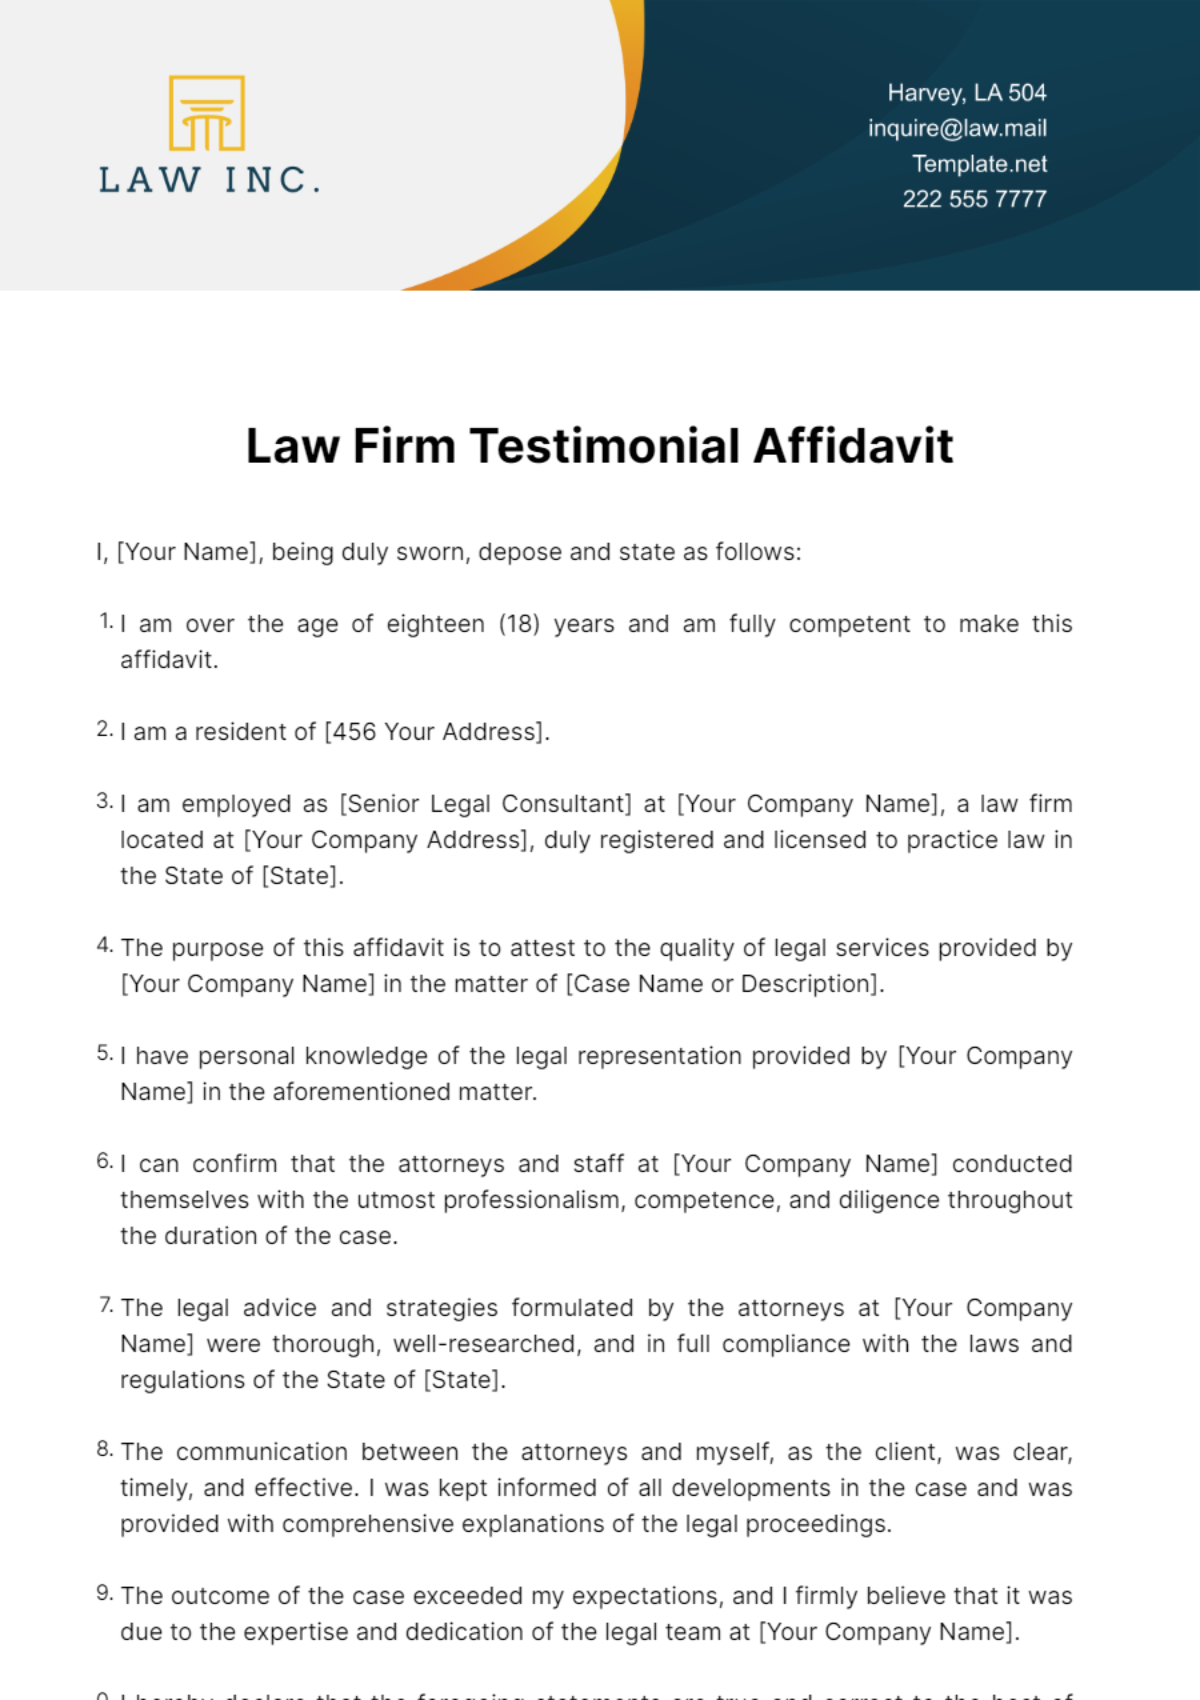 Law Firm Testimonial Affidavit Template